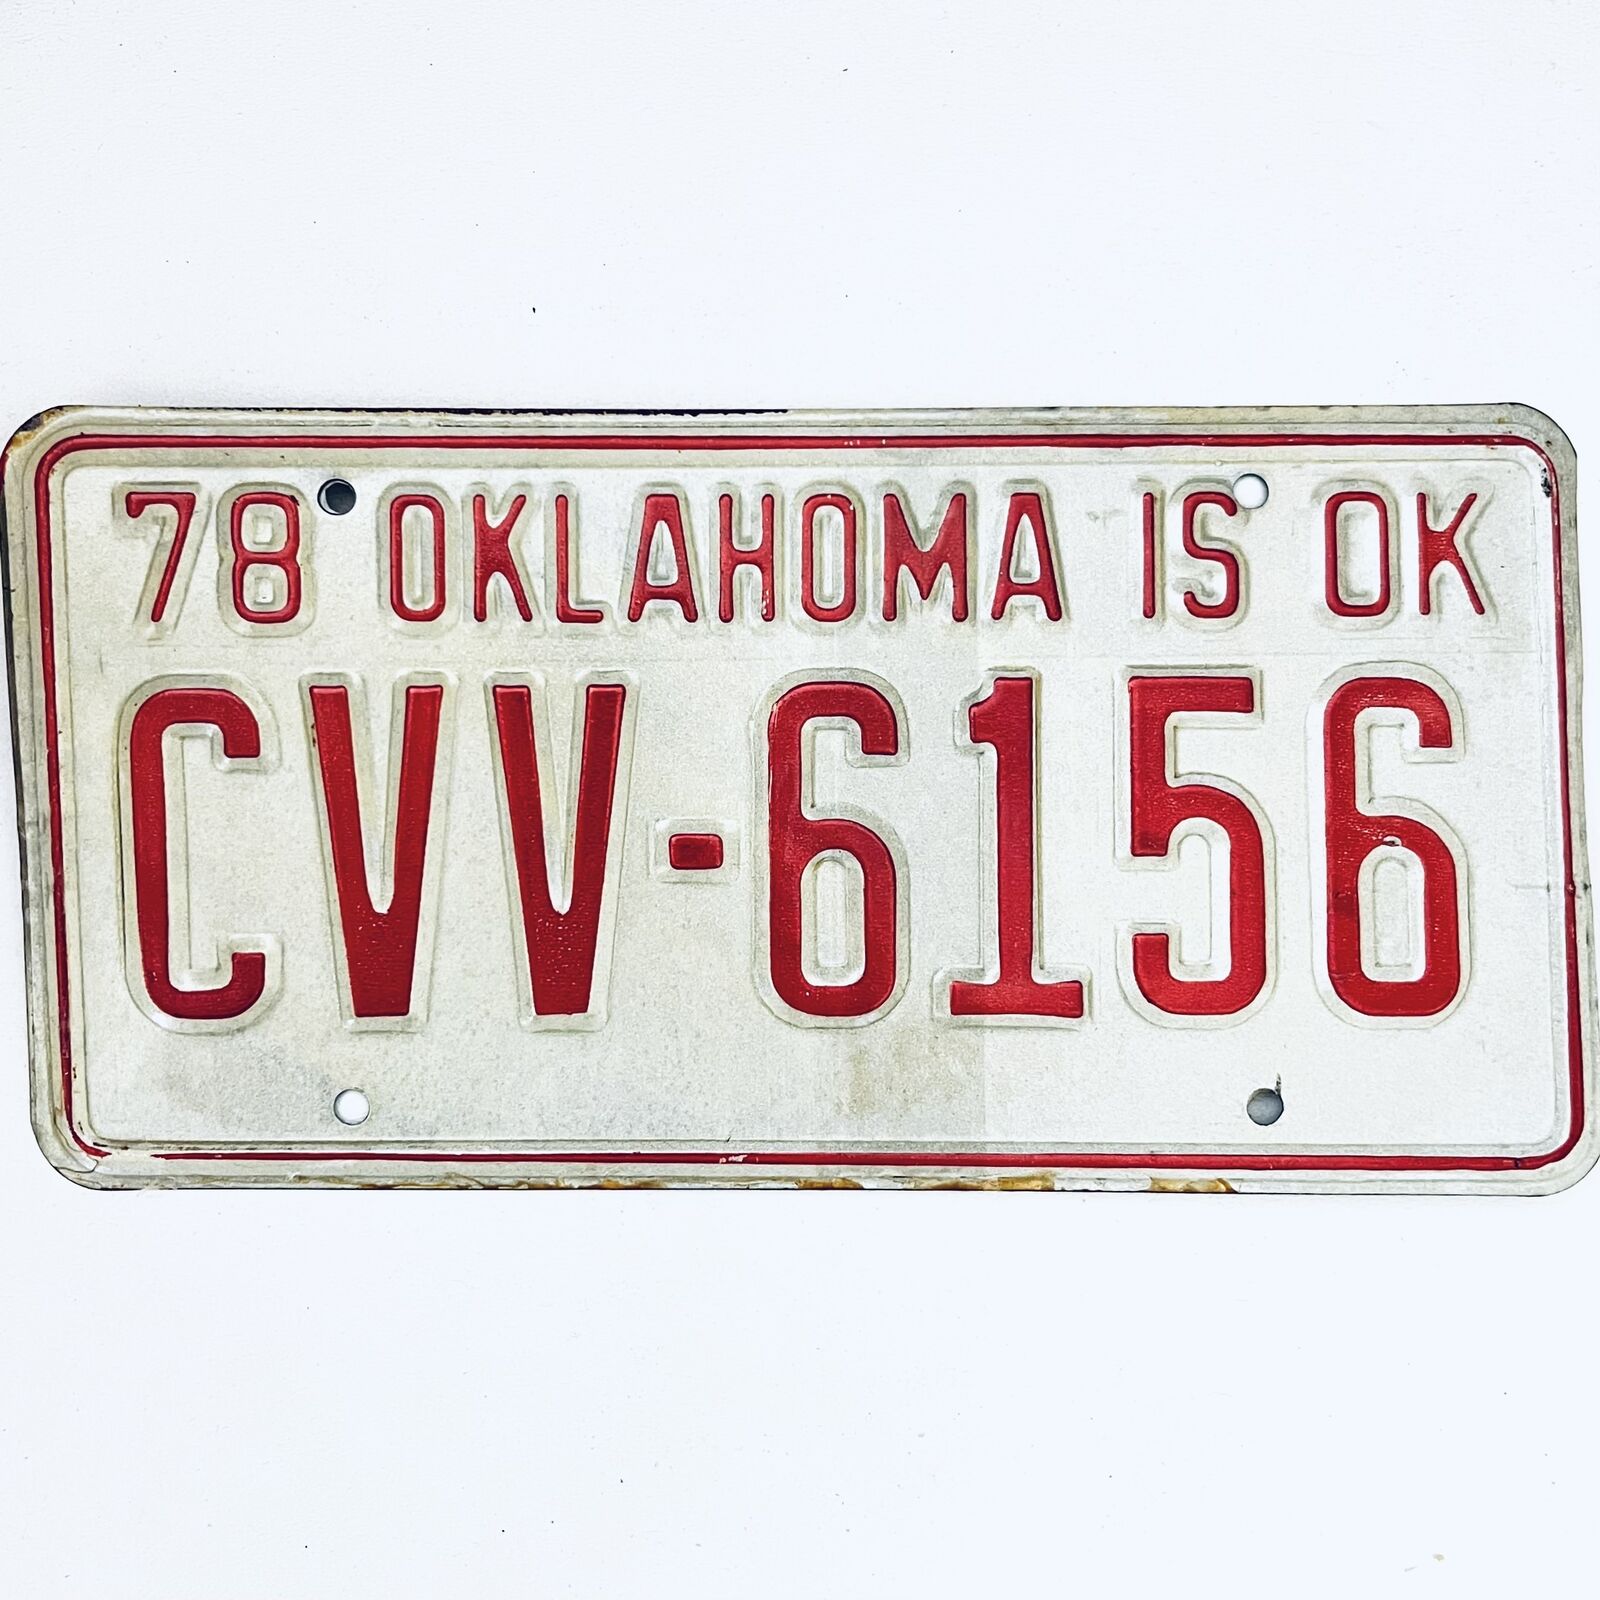 1978 United States Oklahoma Cleveland County Passenger License Plate CVV-6156